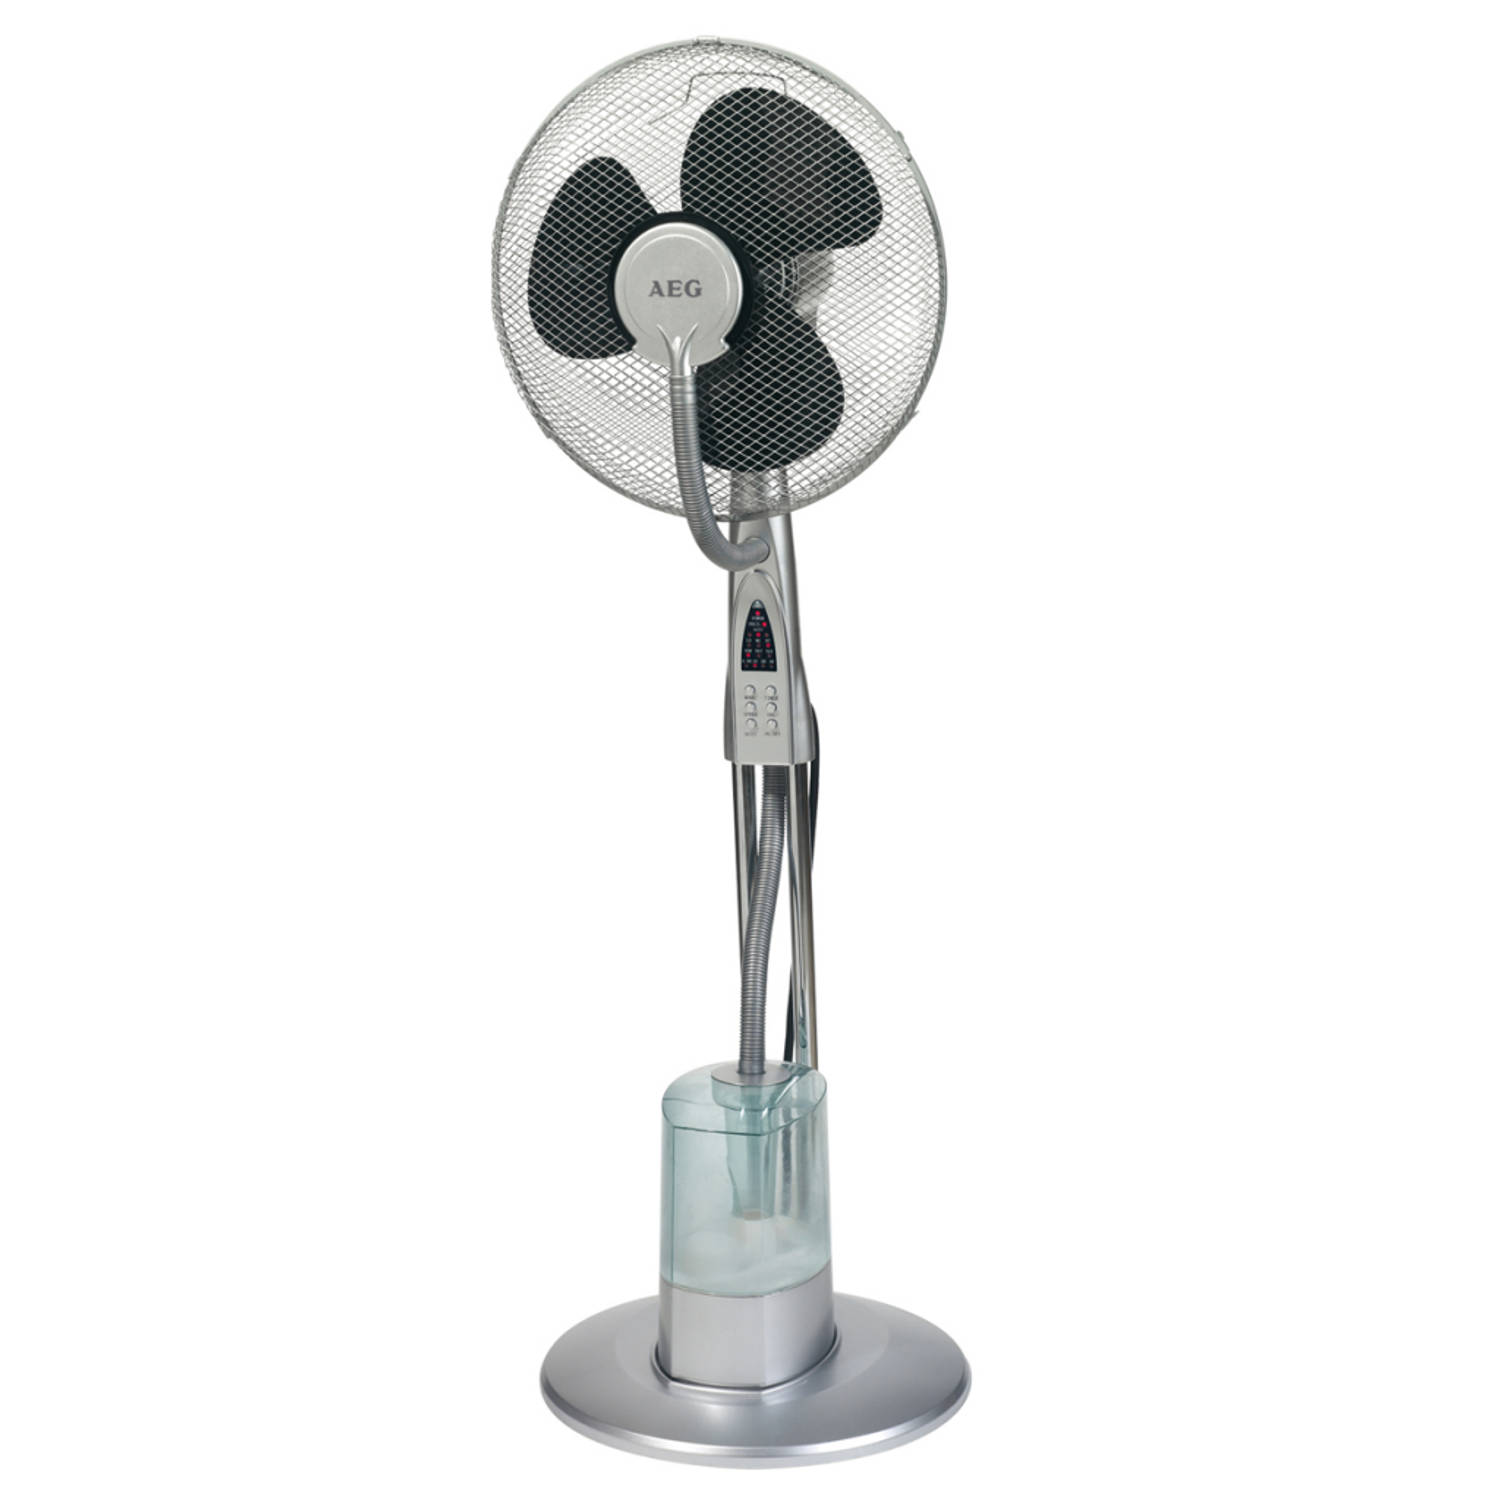 Correctie Grafiek Afdeling Aeg staande ventilator met luchtbevochtiger vl 5569 lb 40 cm | Blokker